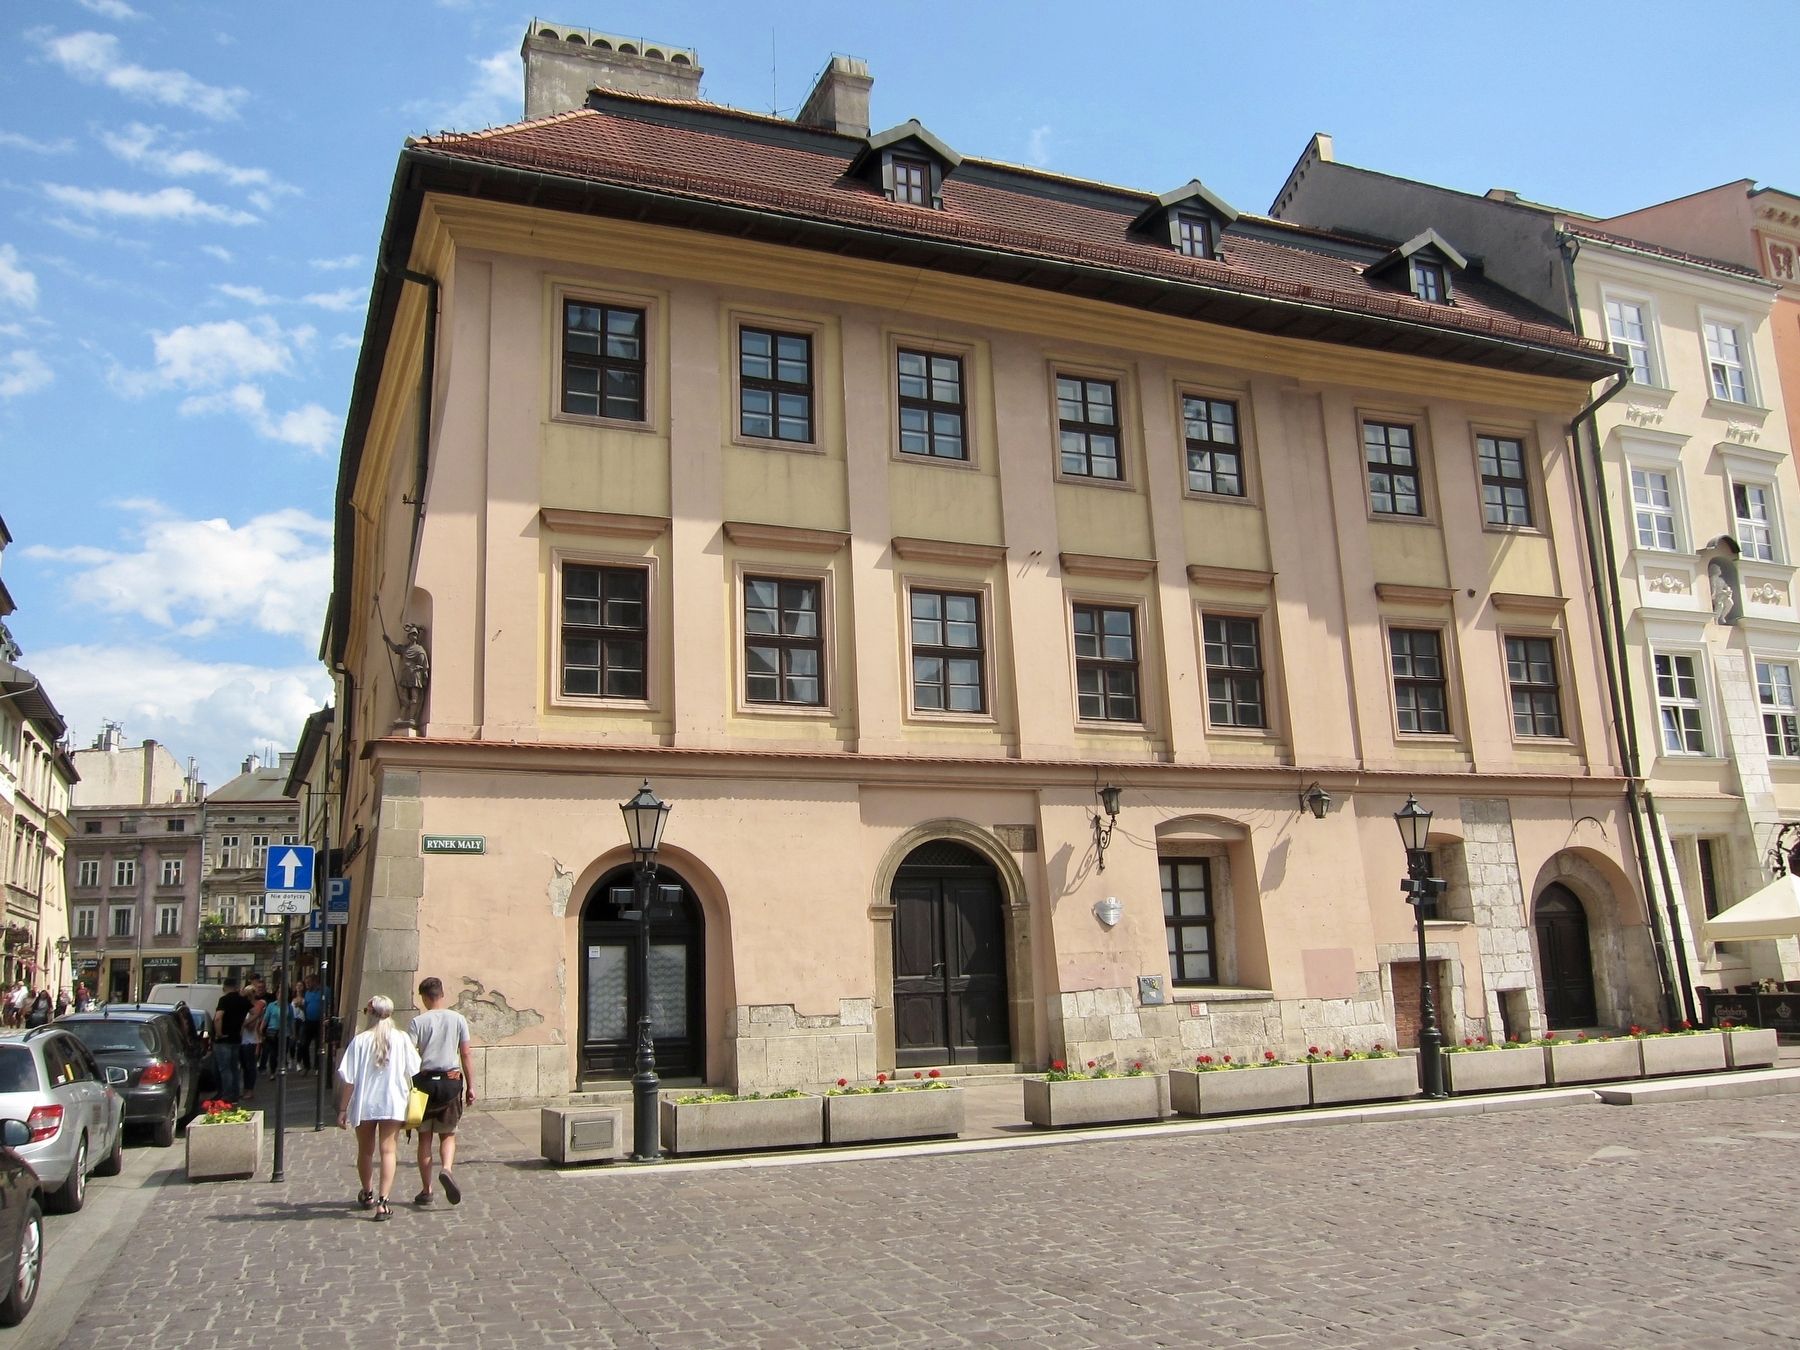 Kamienica Strzemboszowska / The Strzemboszowska House and Marker image. Click for full size.